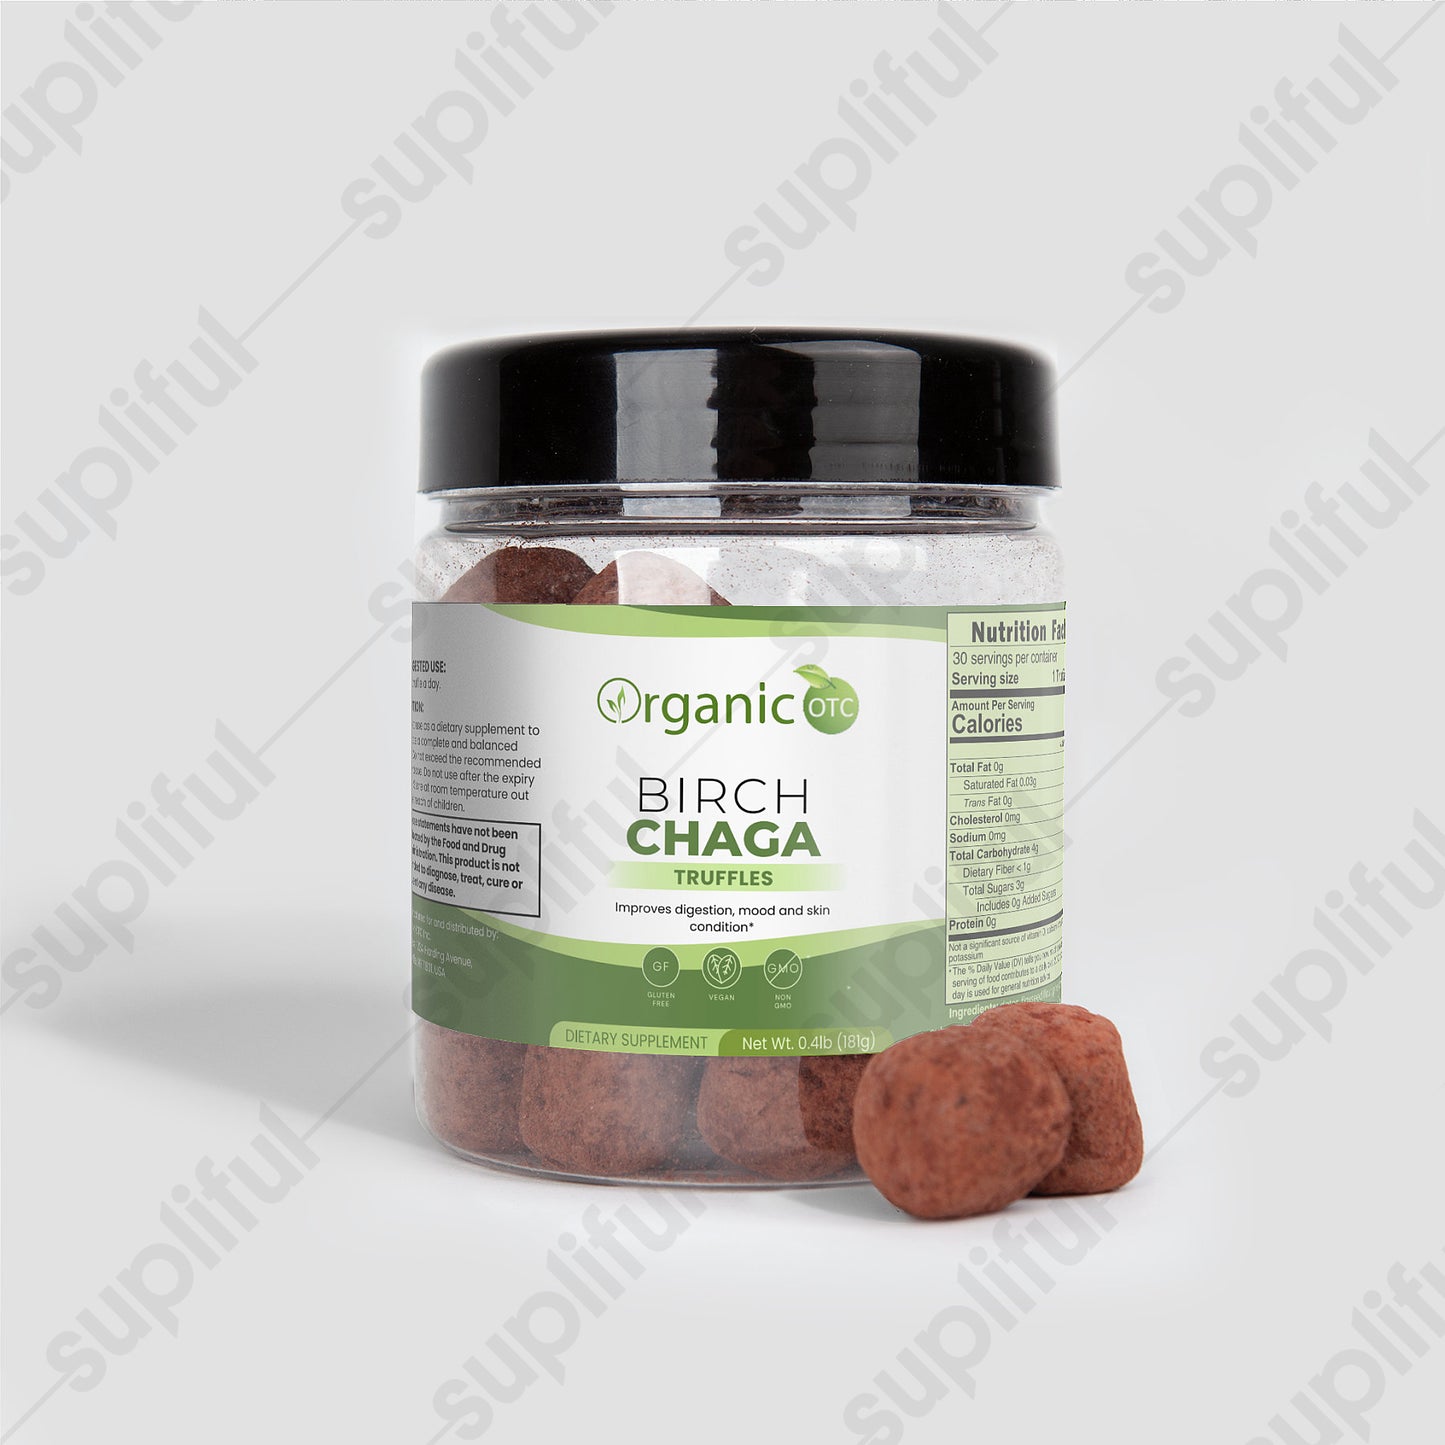 Birch Chaga Truffles - Organic OTC